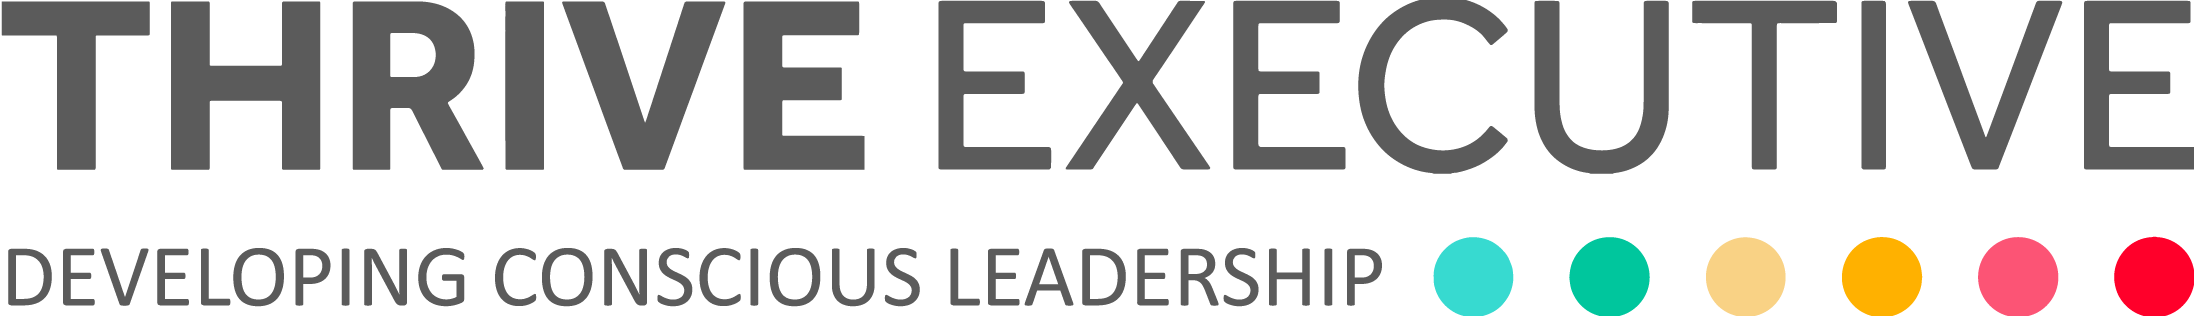 Thrive Executive Logo Developing Conscious Leadership